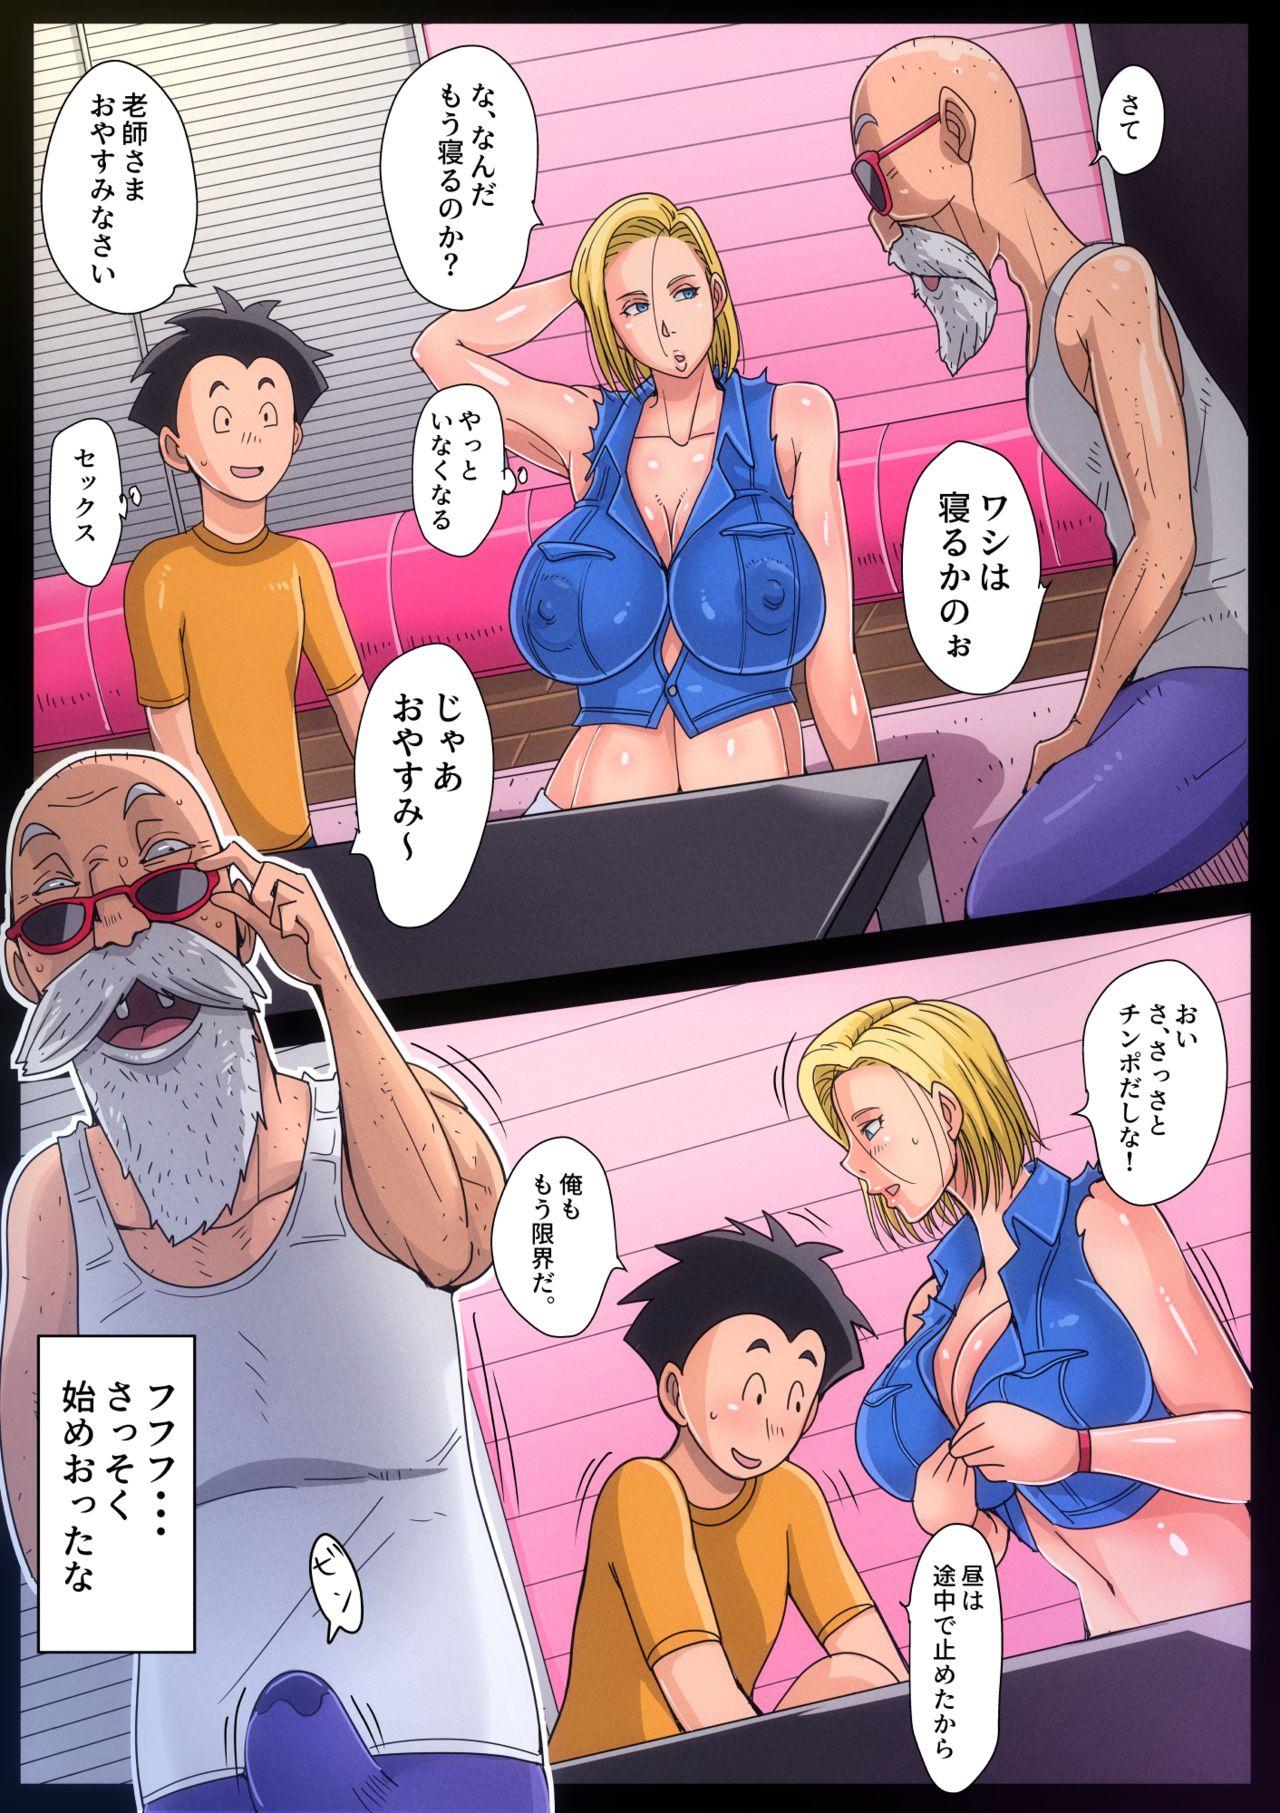 Instagram B-Kyuu Manga 10 - Dragon ball z Longhair - Page 3